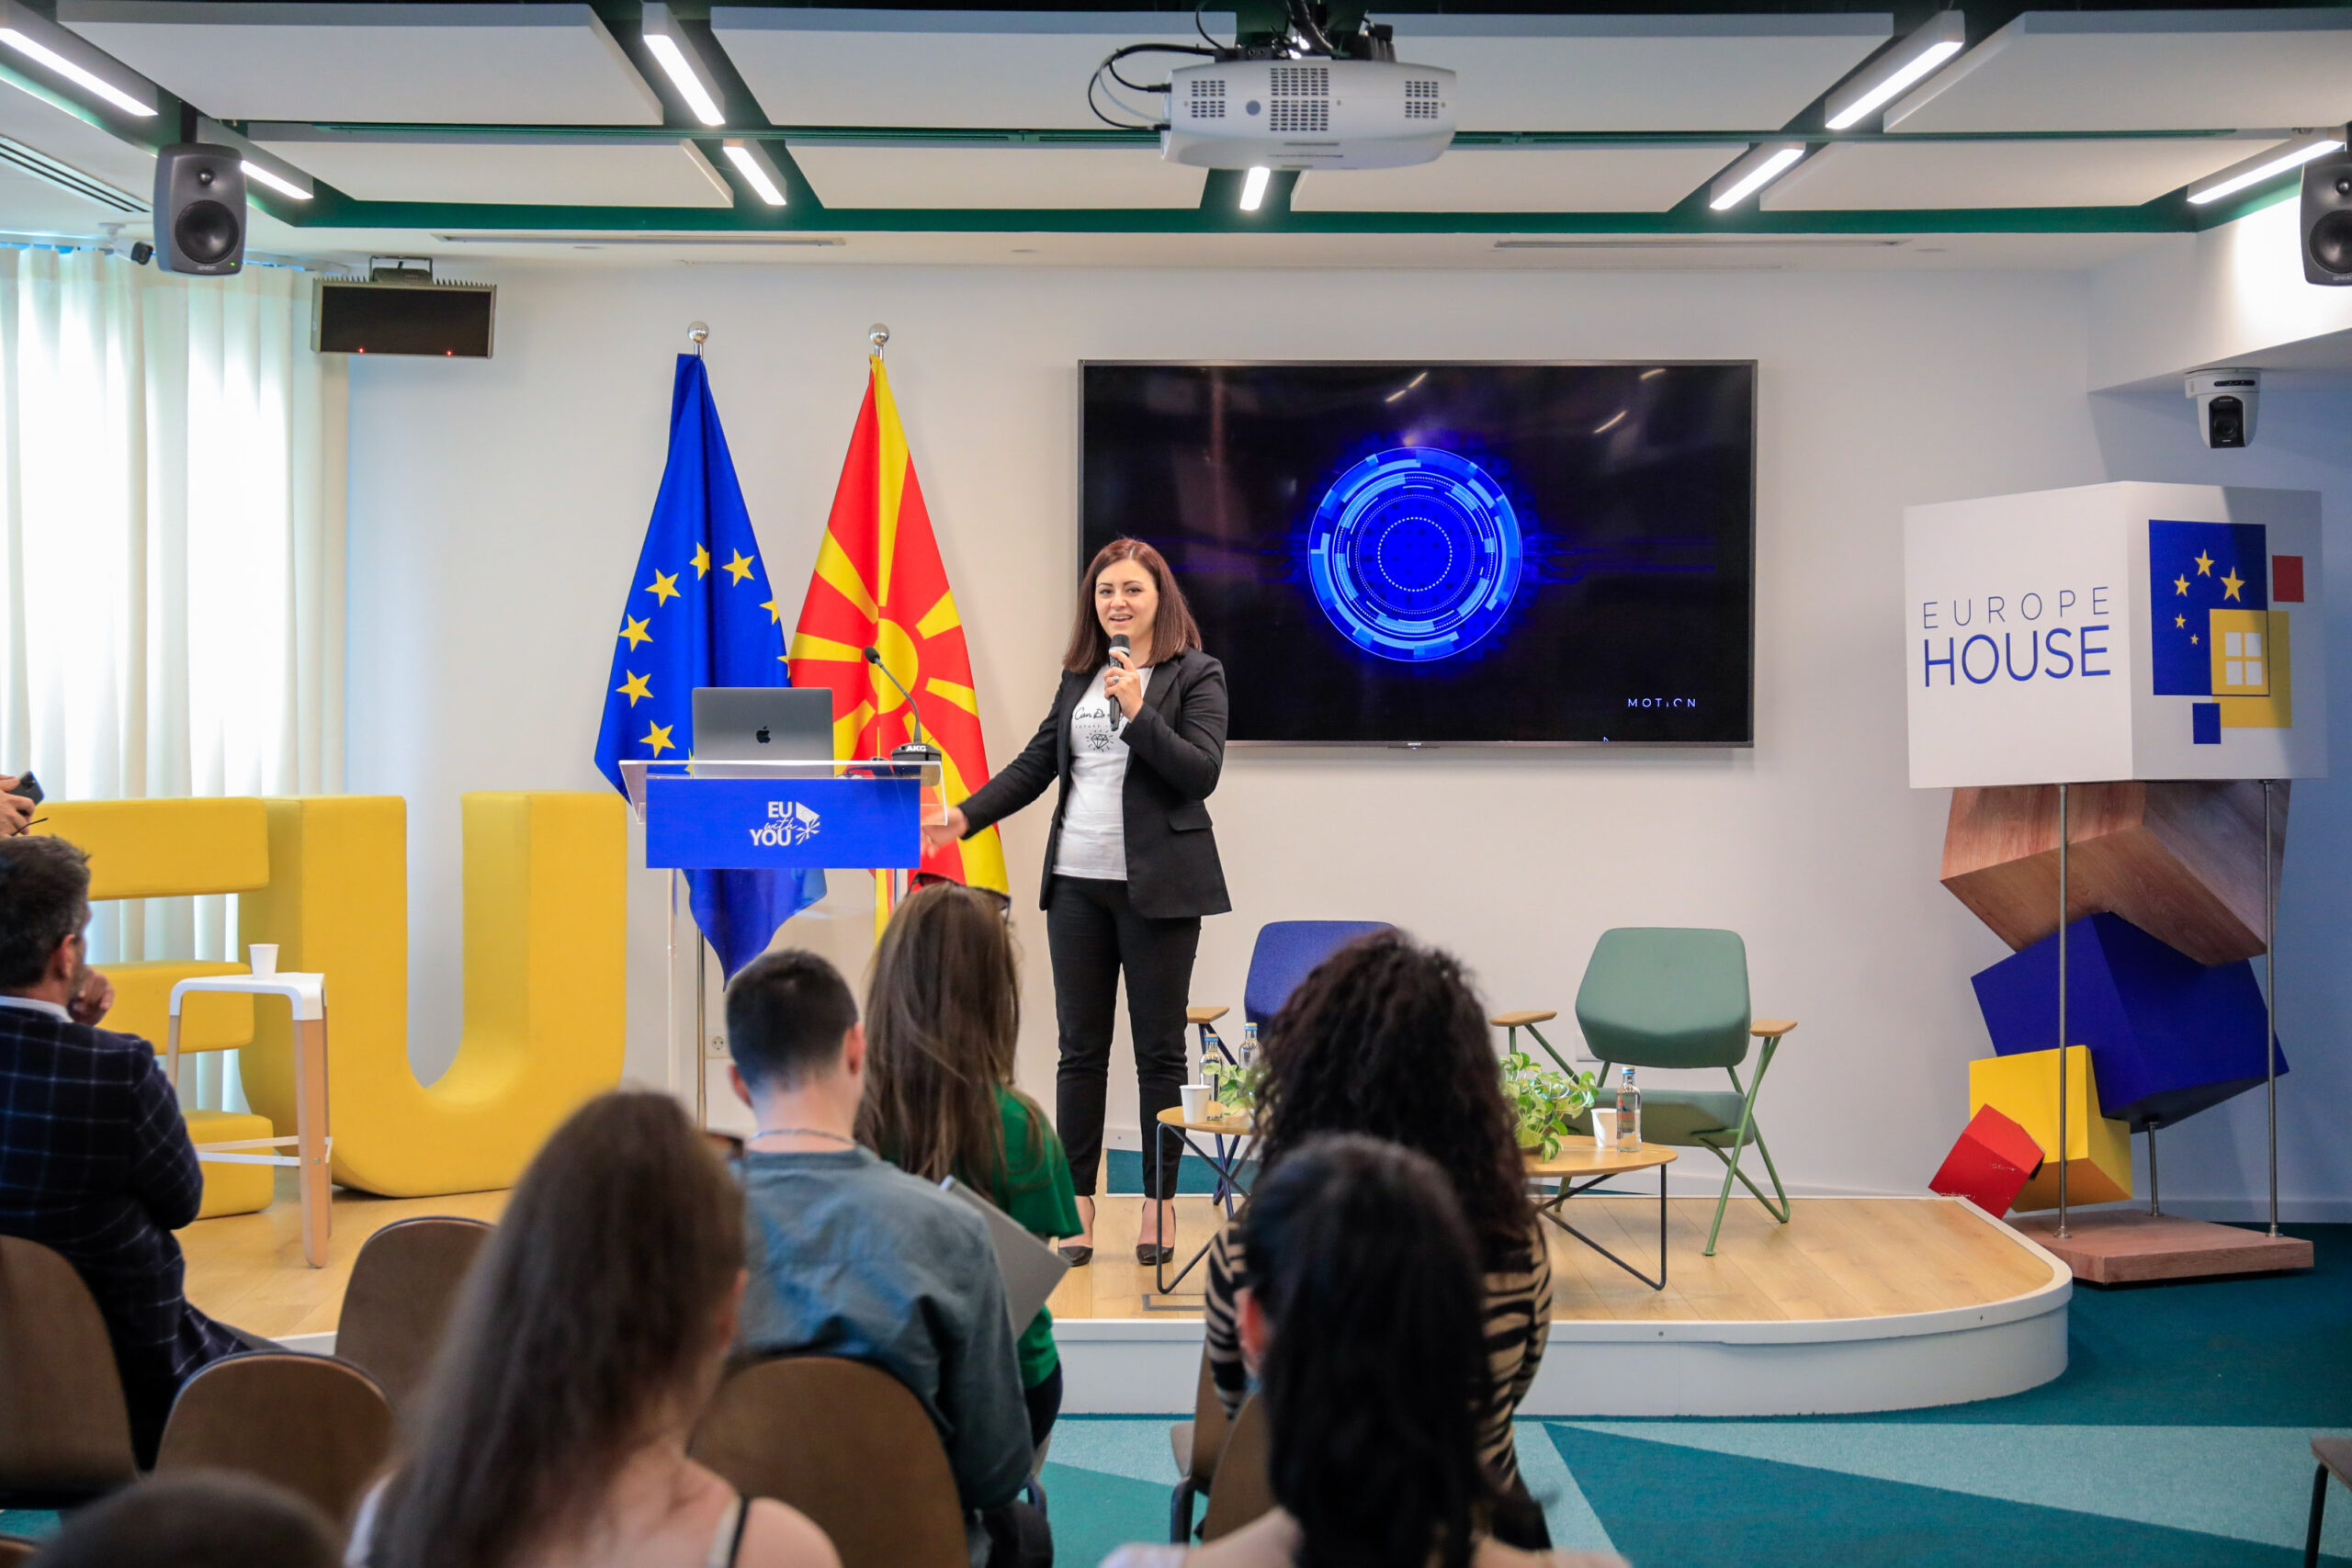 “Дигитална трансформација” панел дискусија во Europe House Скопје